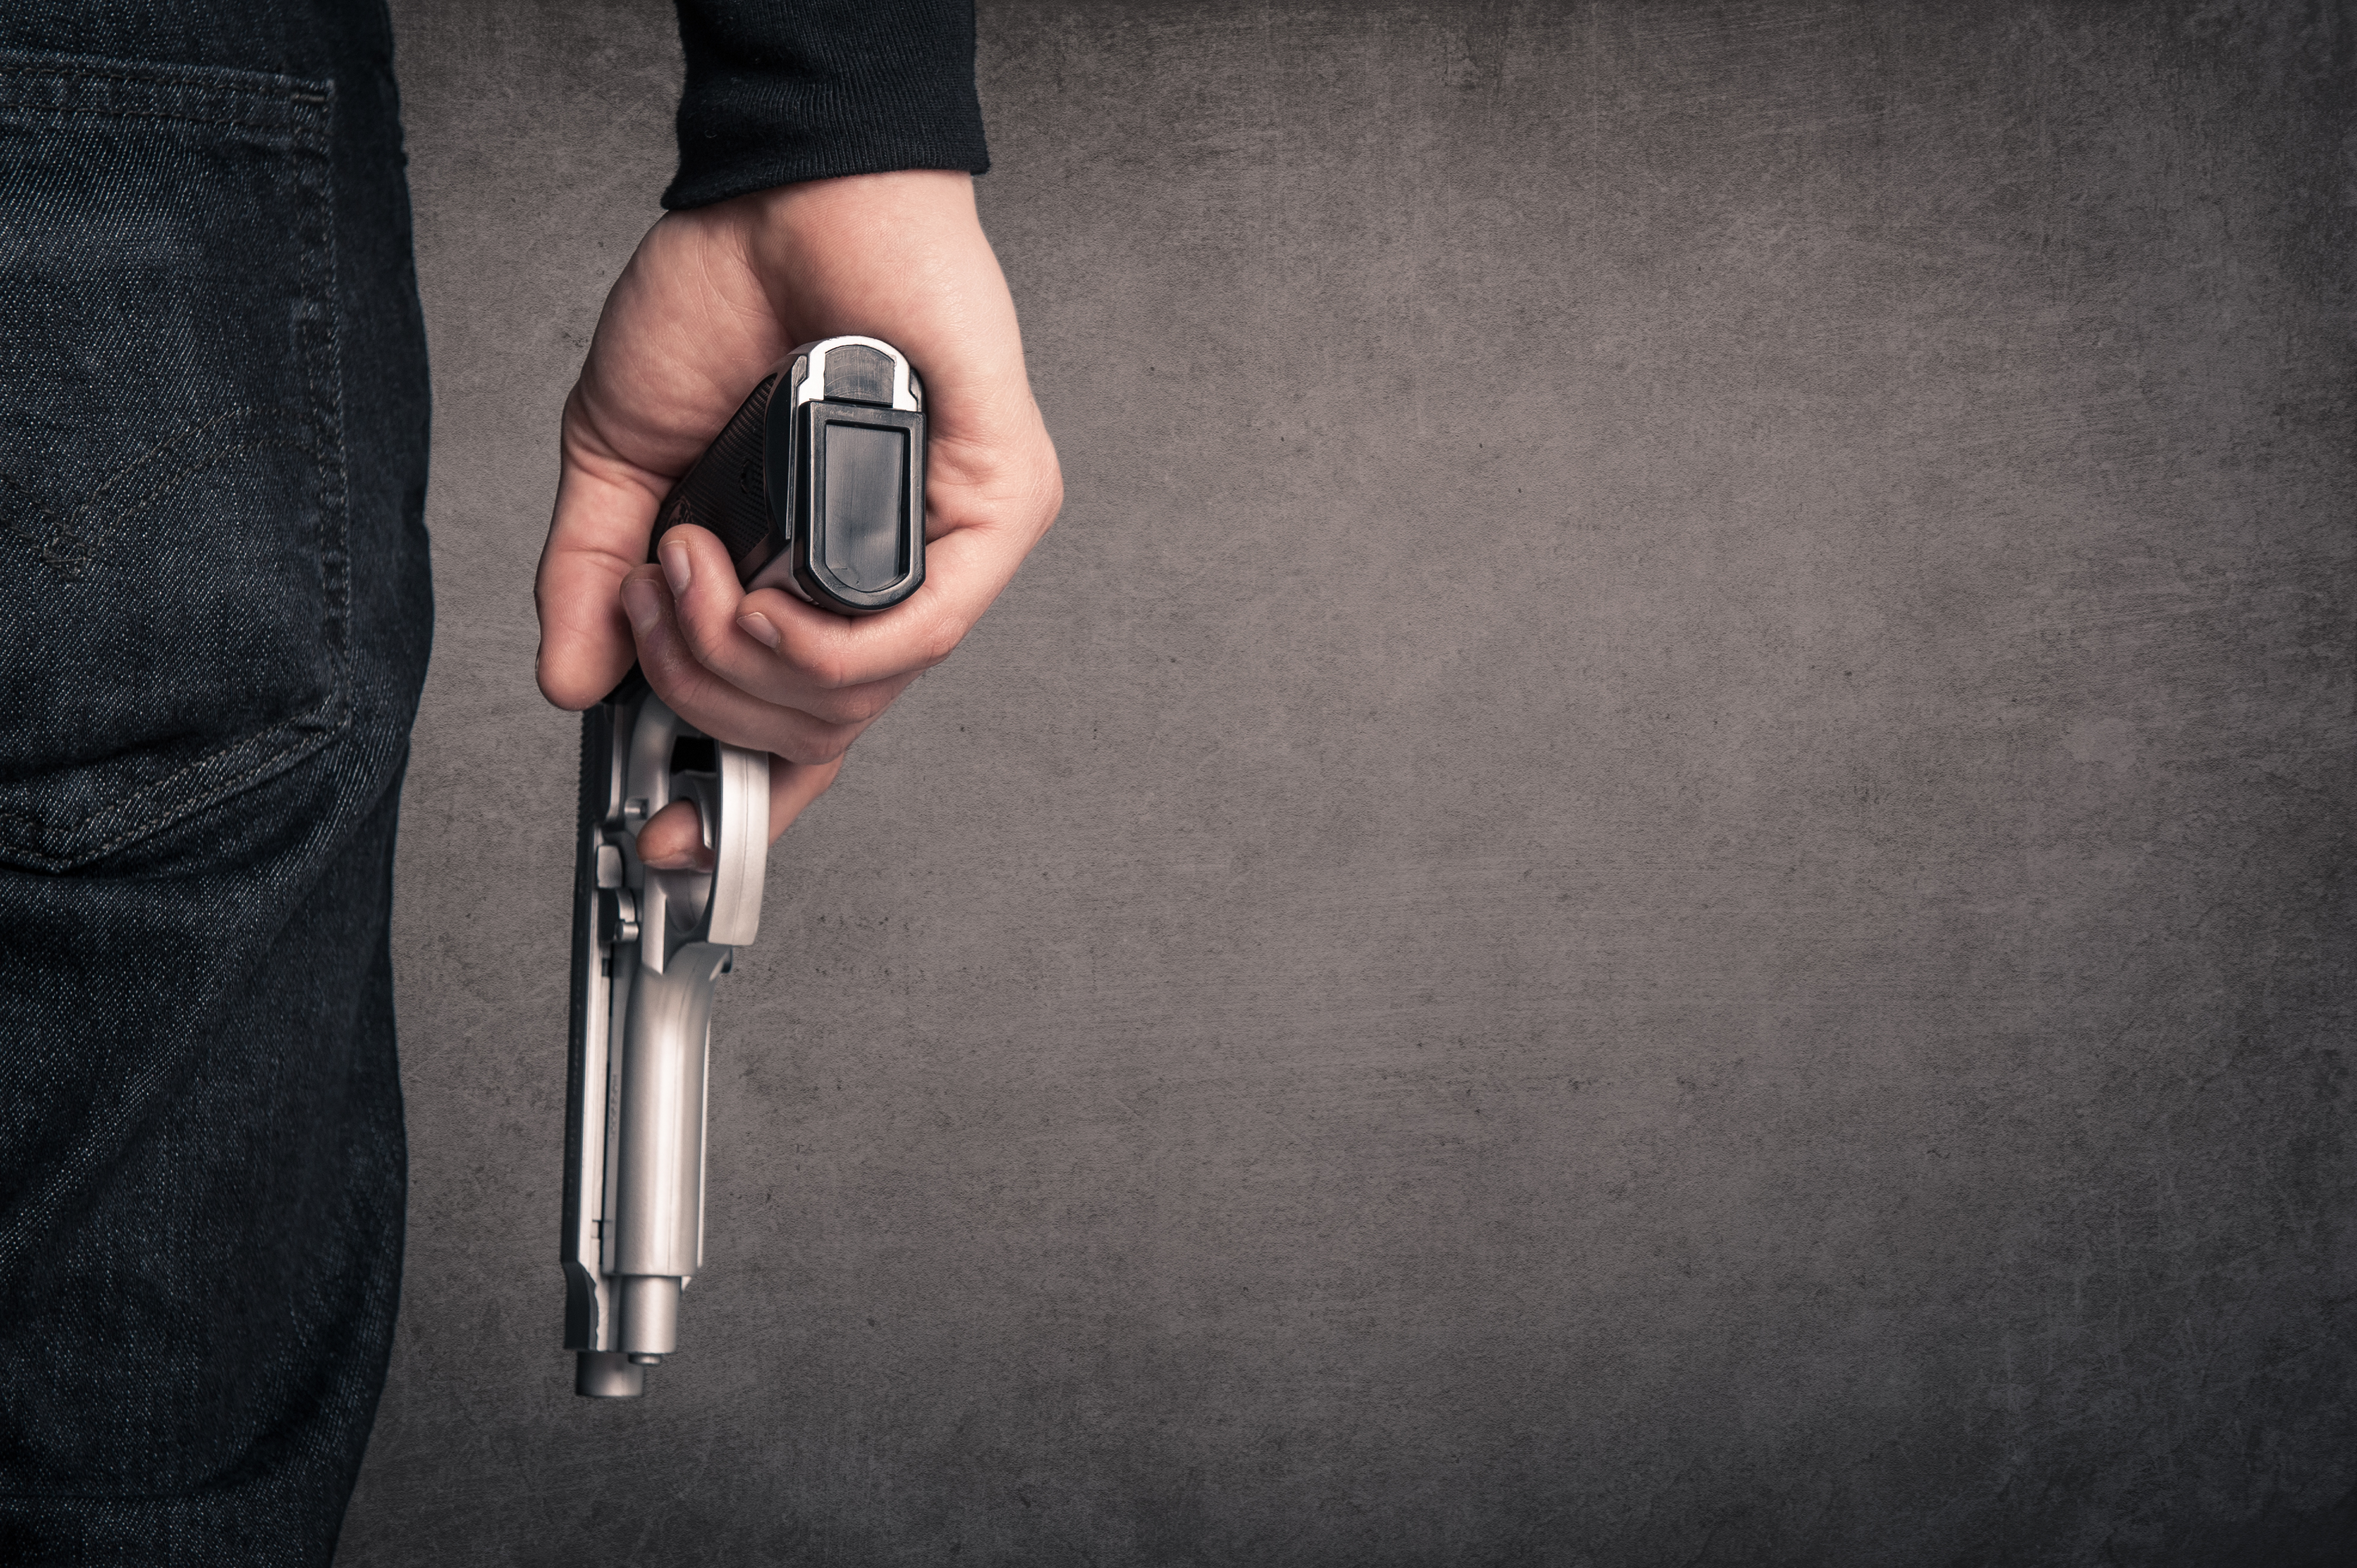 Killer with gun | Source: Shutterstock